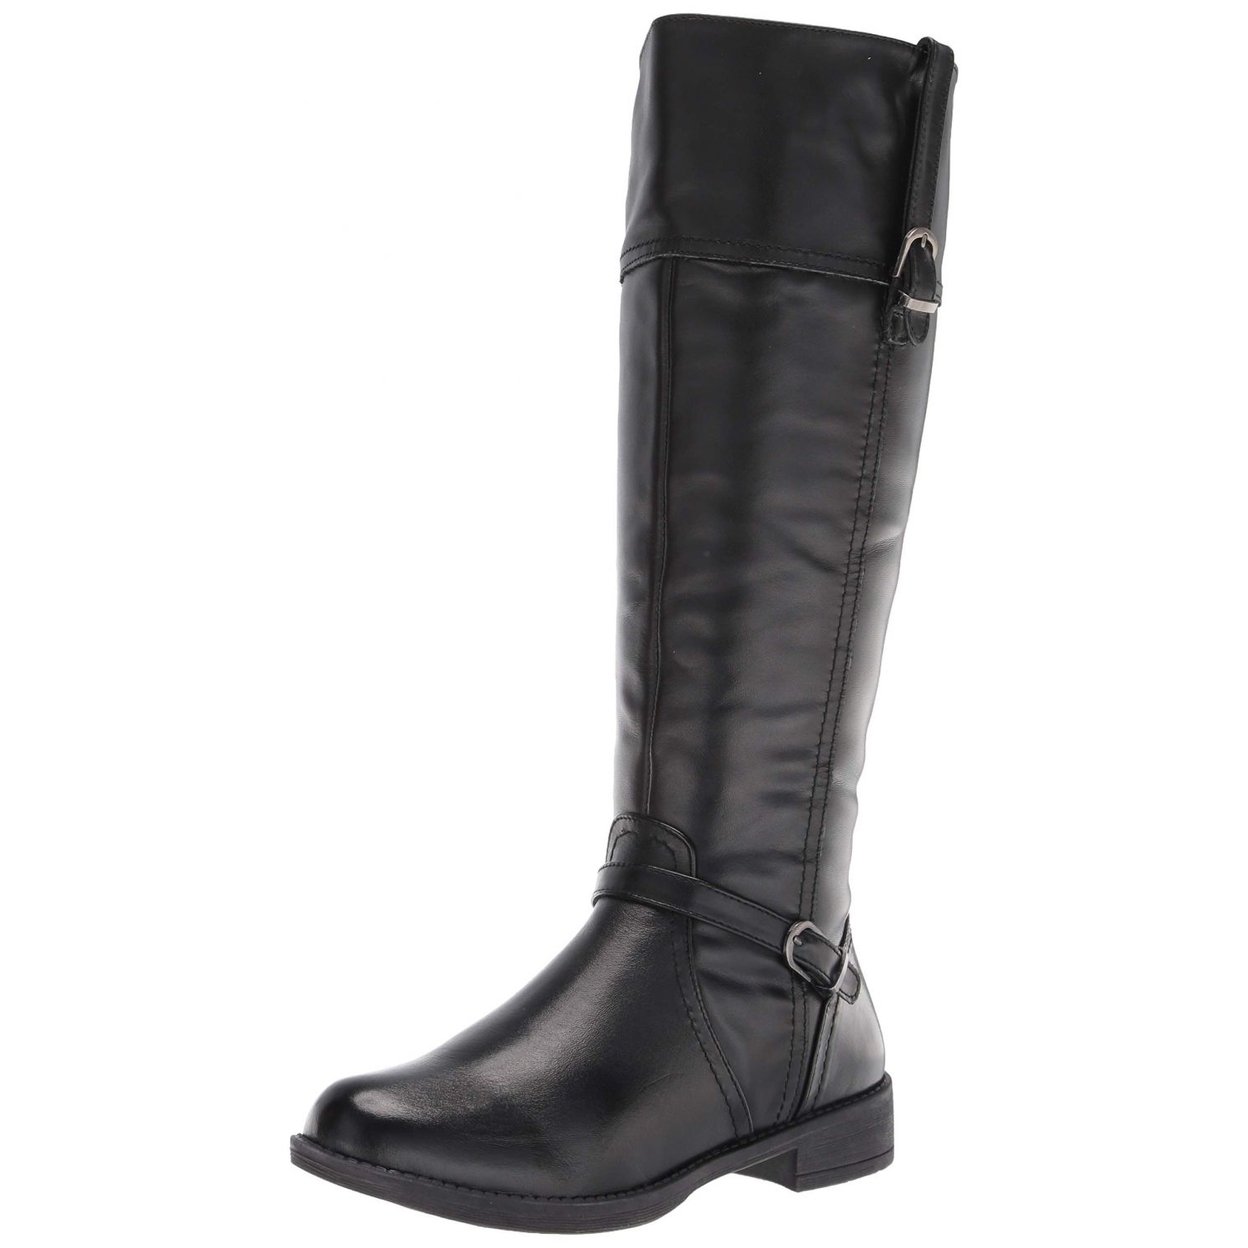 Propet Womens Tasha Zippered Casual Boots Knee High Low Heel 1-2 - Black BROWN - BROWN, 9